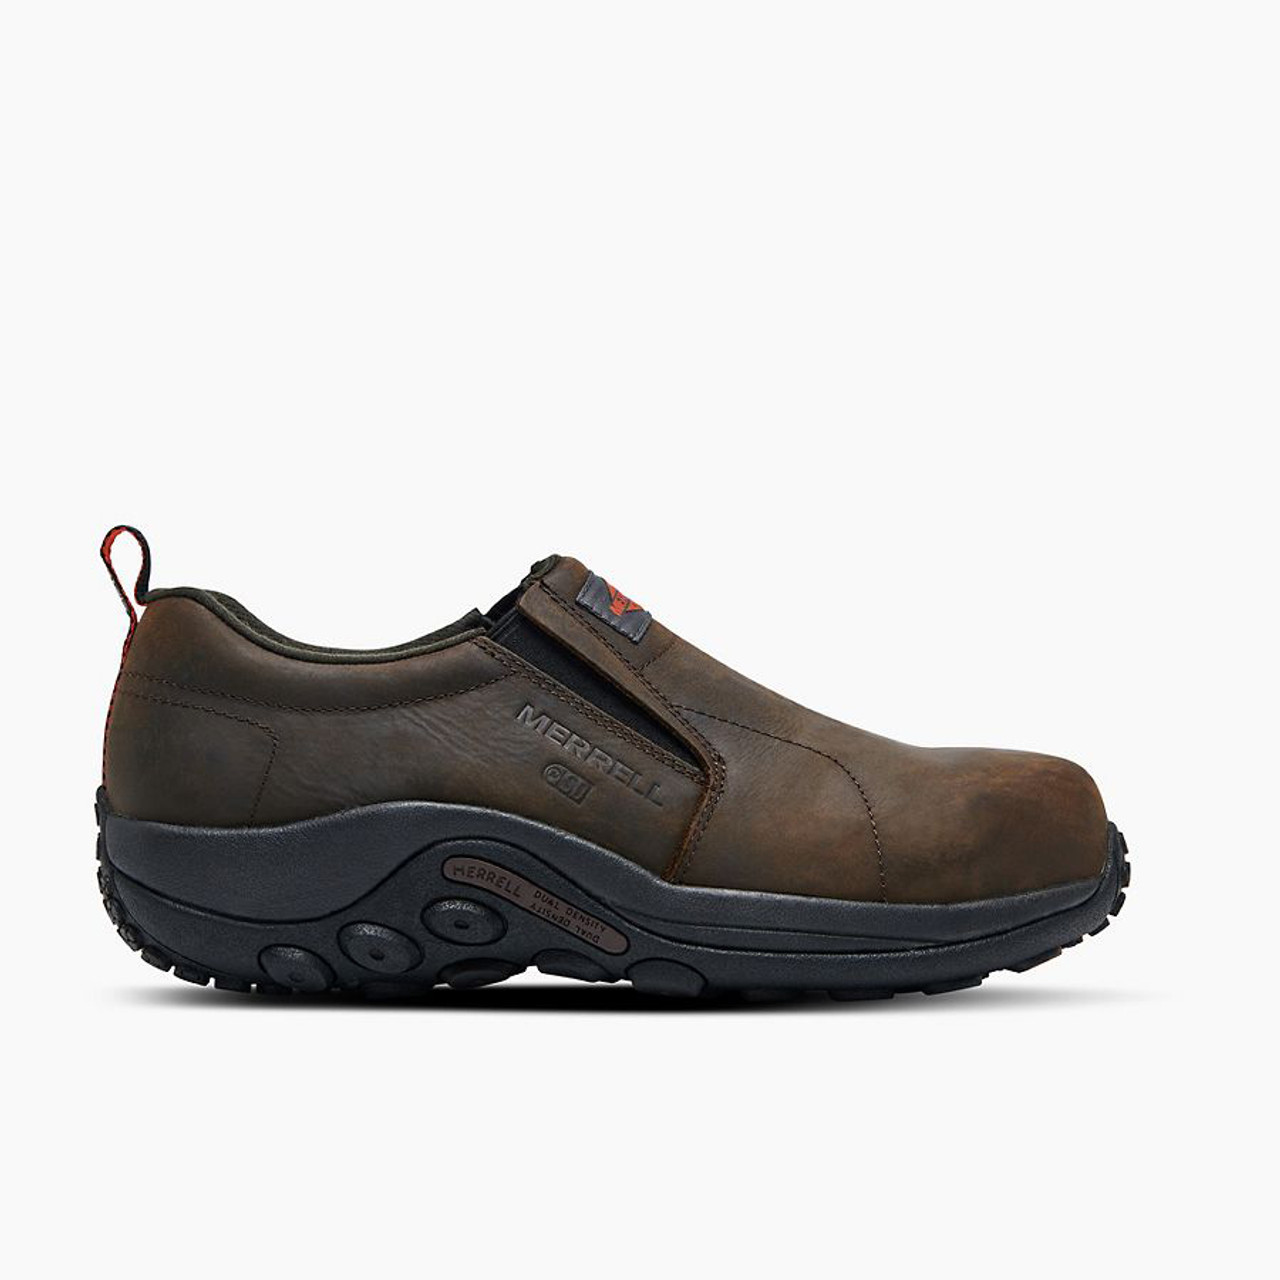 Merrell Jungle #J099381 Composite Safety Toe Slip Work Shoe